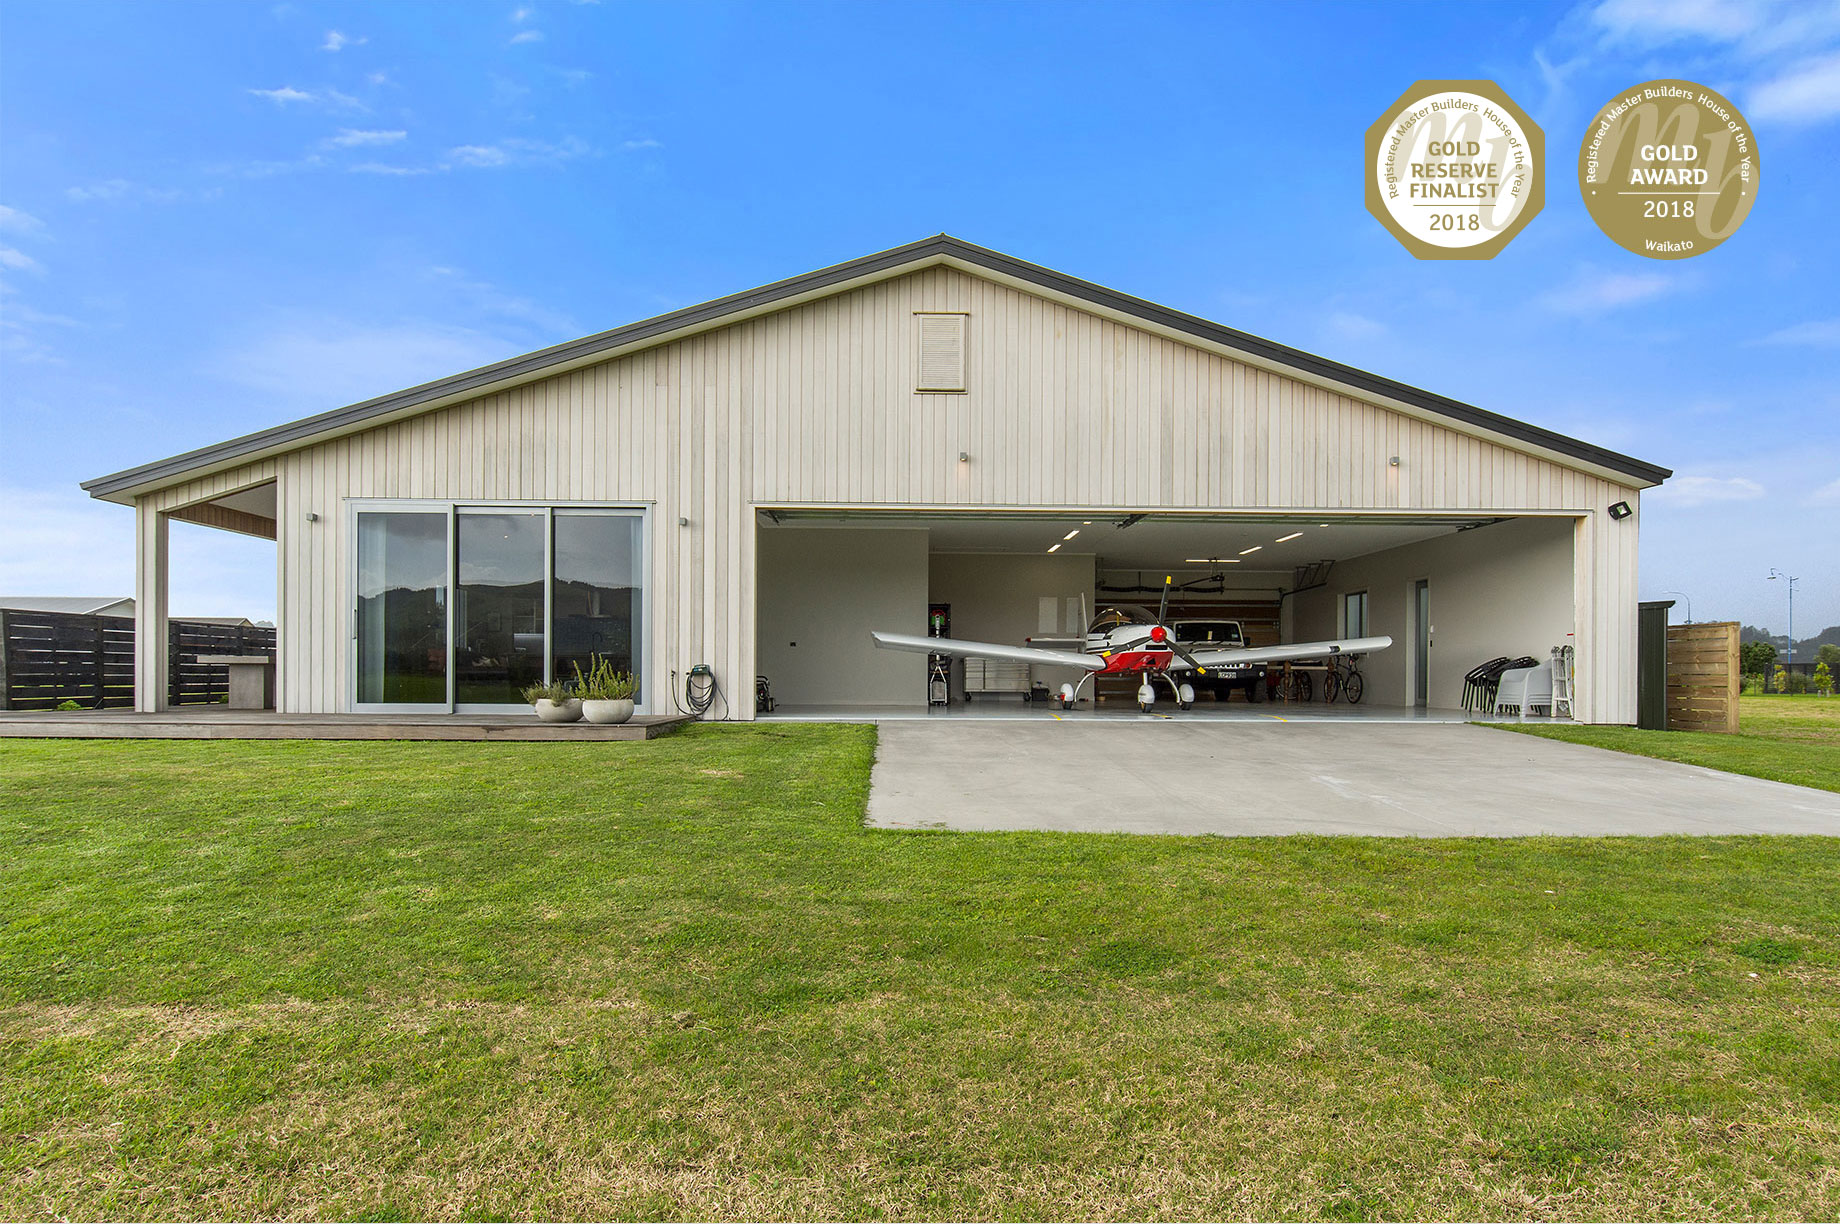 Award winning rural home with an airplane garage